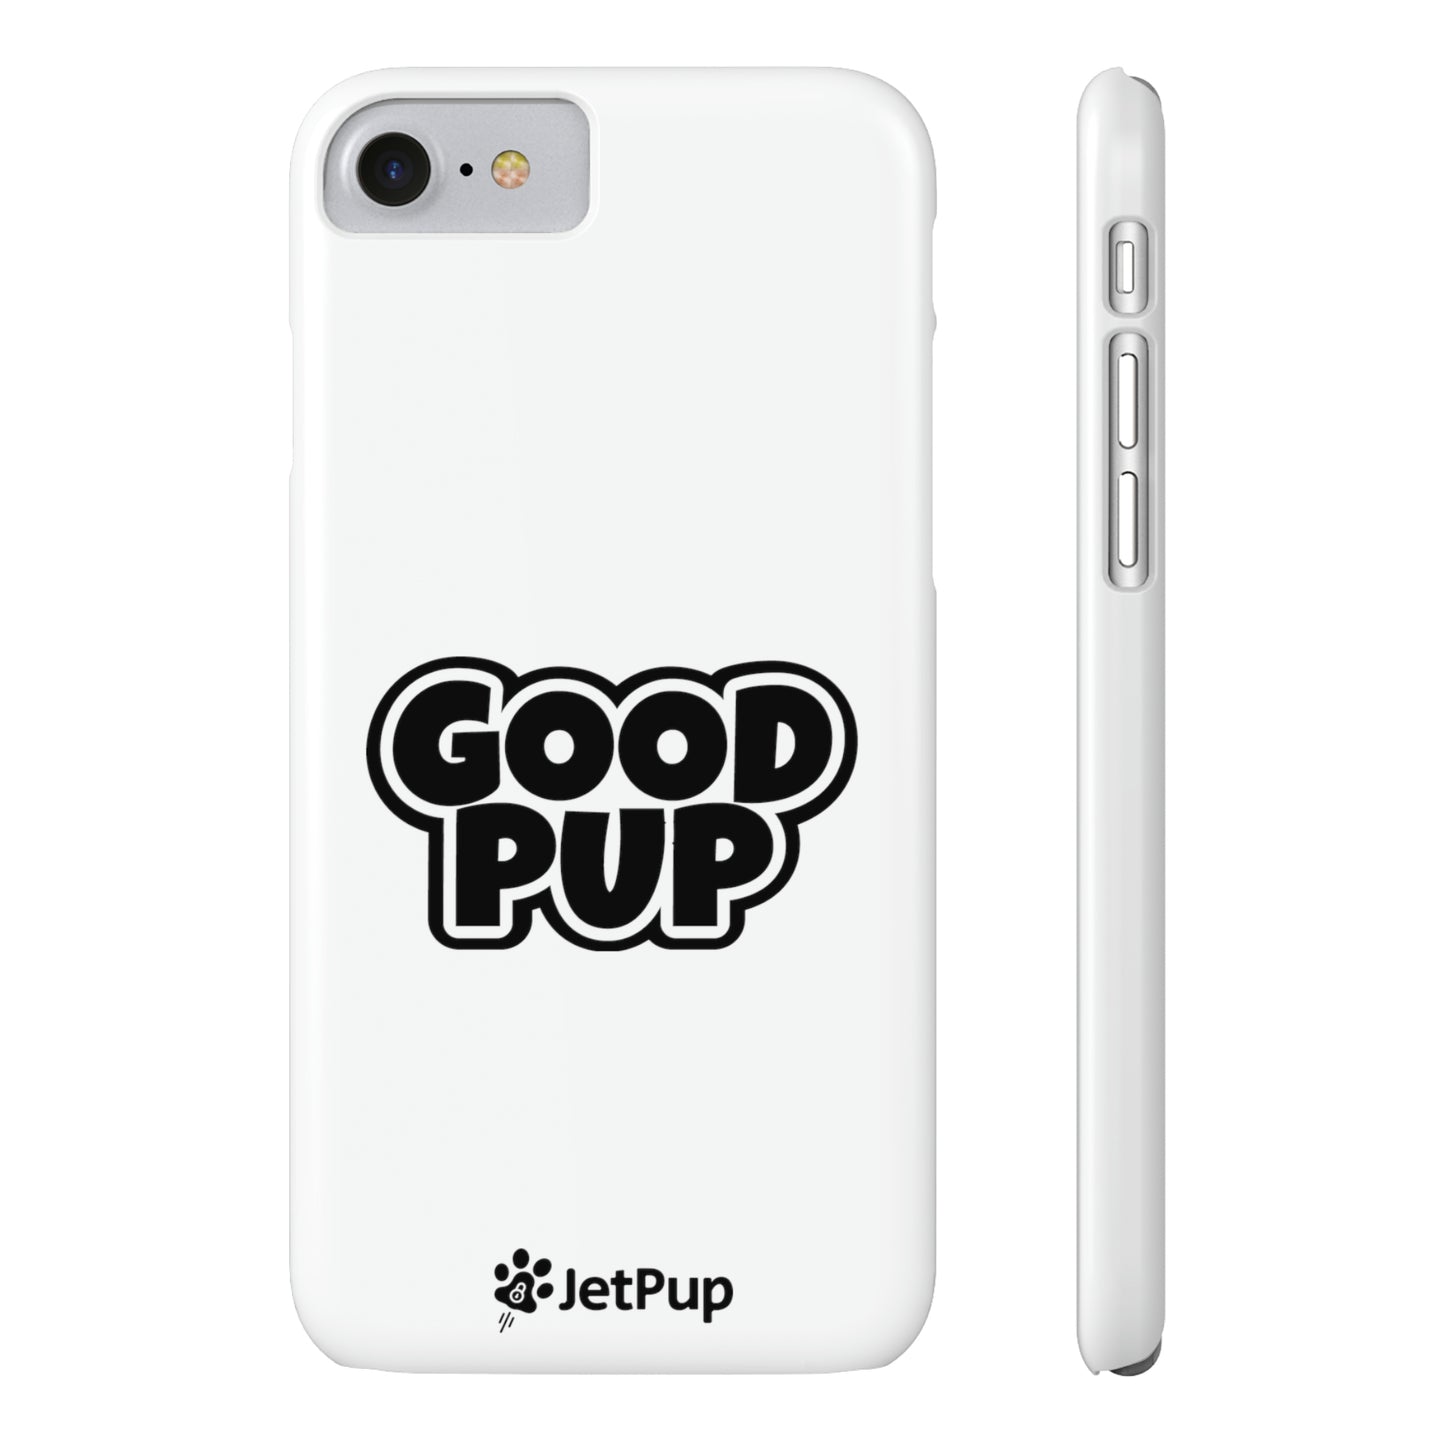 Good Pup Slim iPhone Cases - White